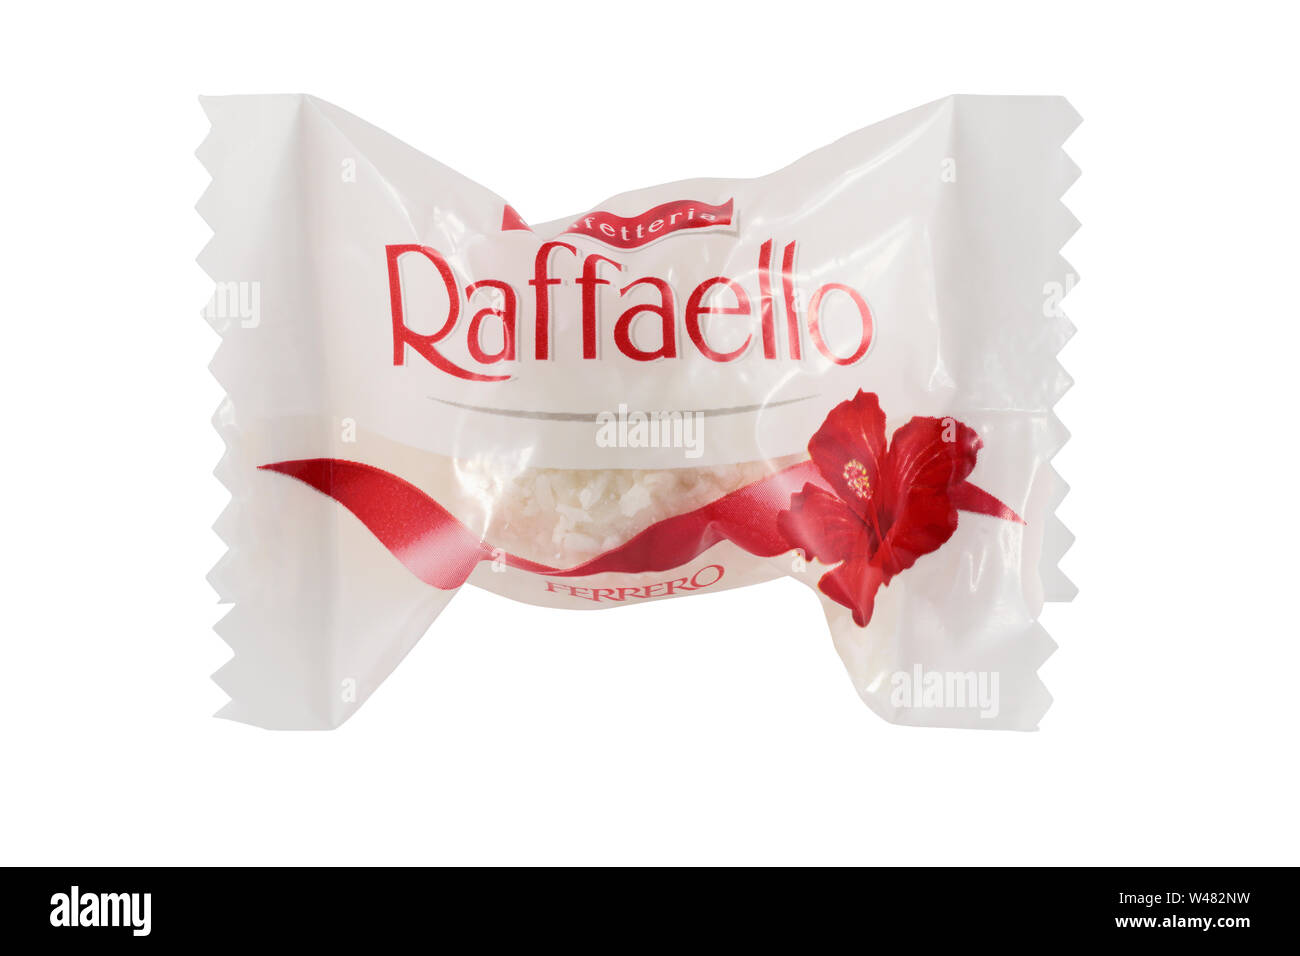 Un único envuelto Ferrero Rafaello aislado sobre un fondo blanco. Foto de stock